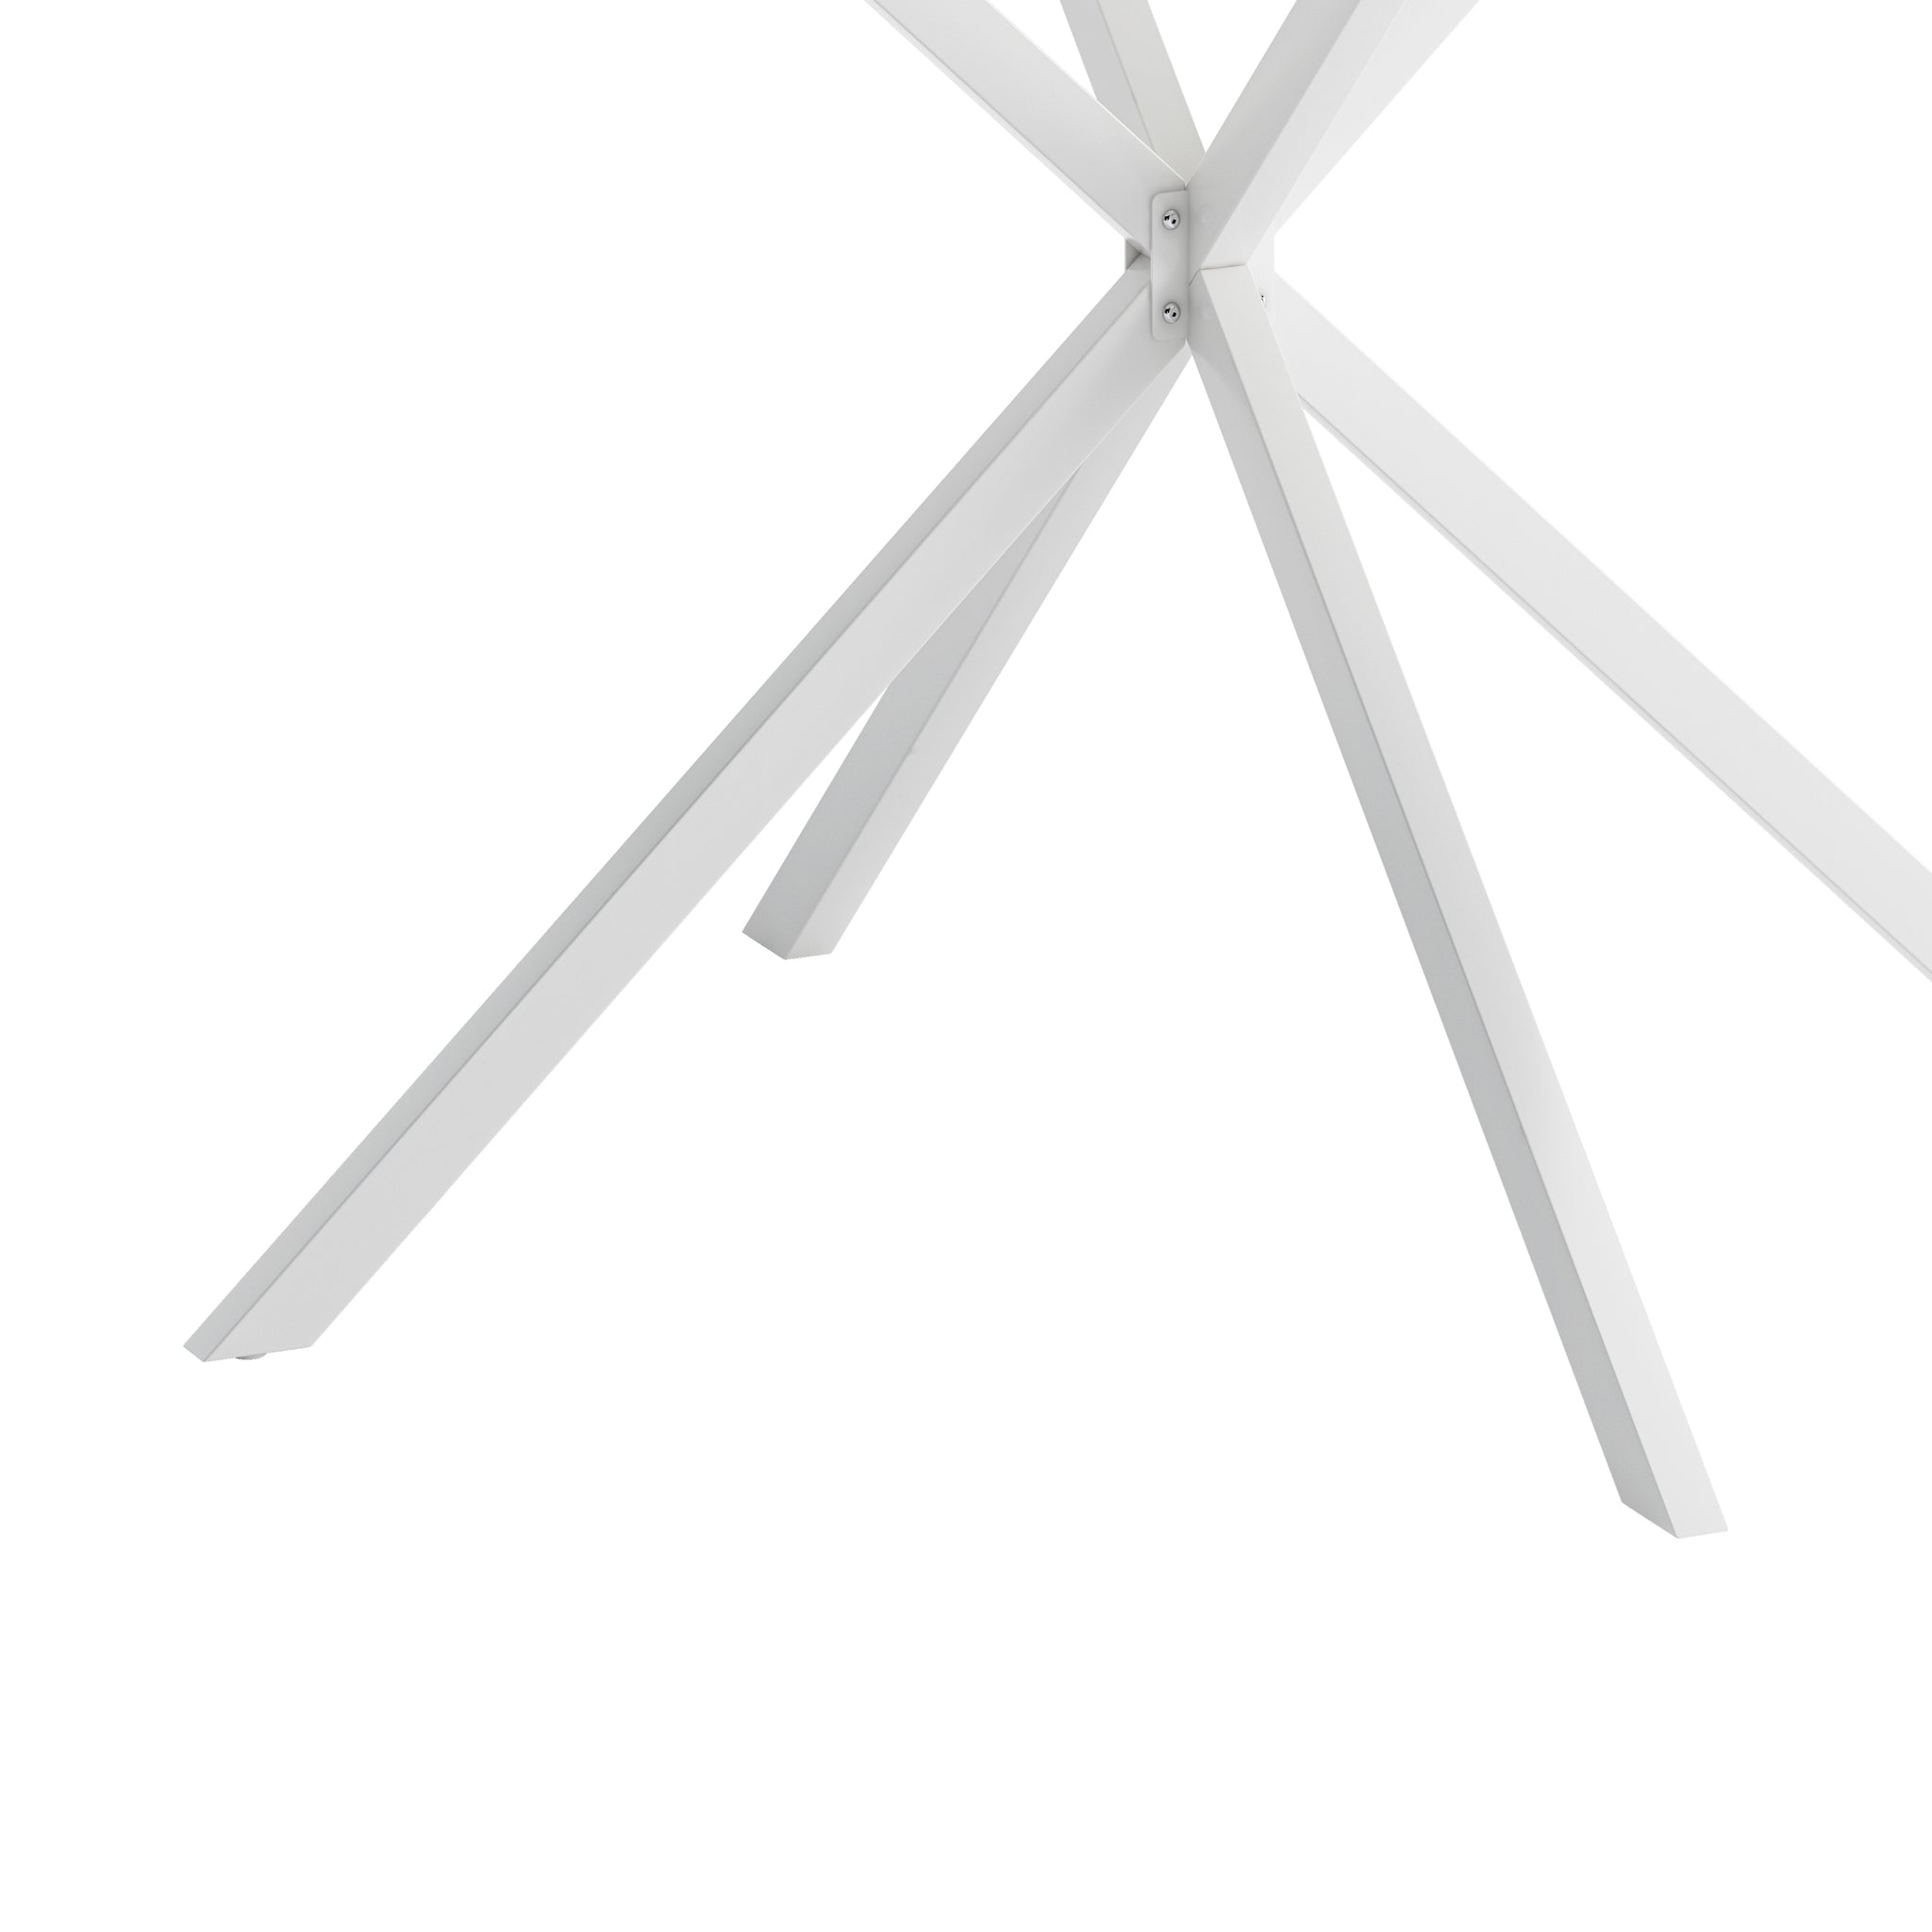 47.24'' Modern Cross Leg Round Dining Table, White white-mdf+metal